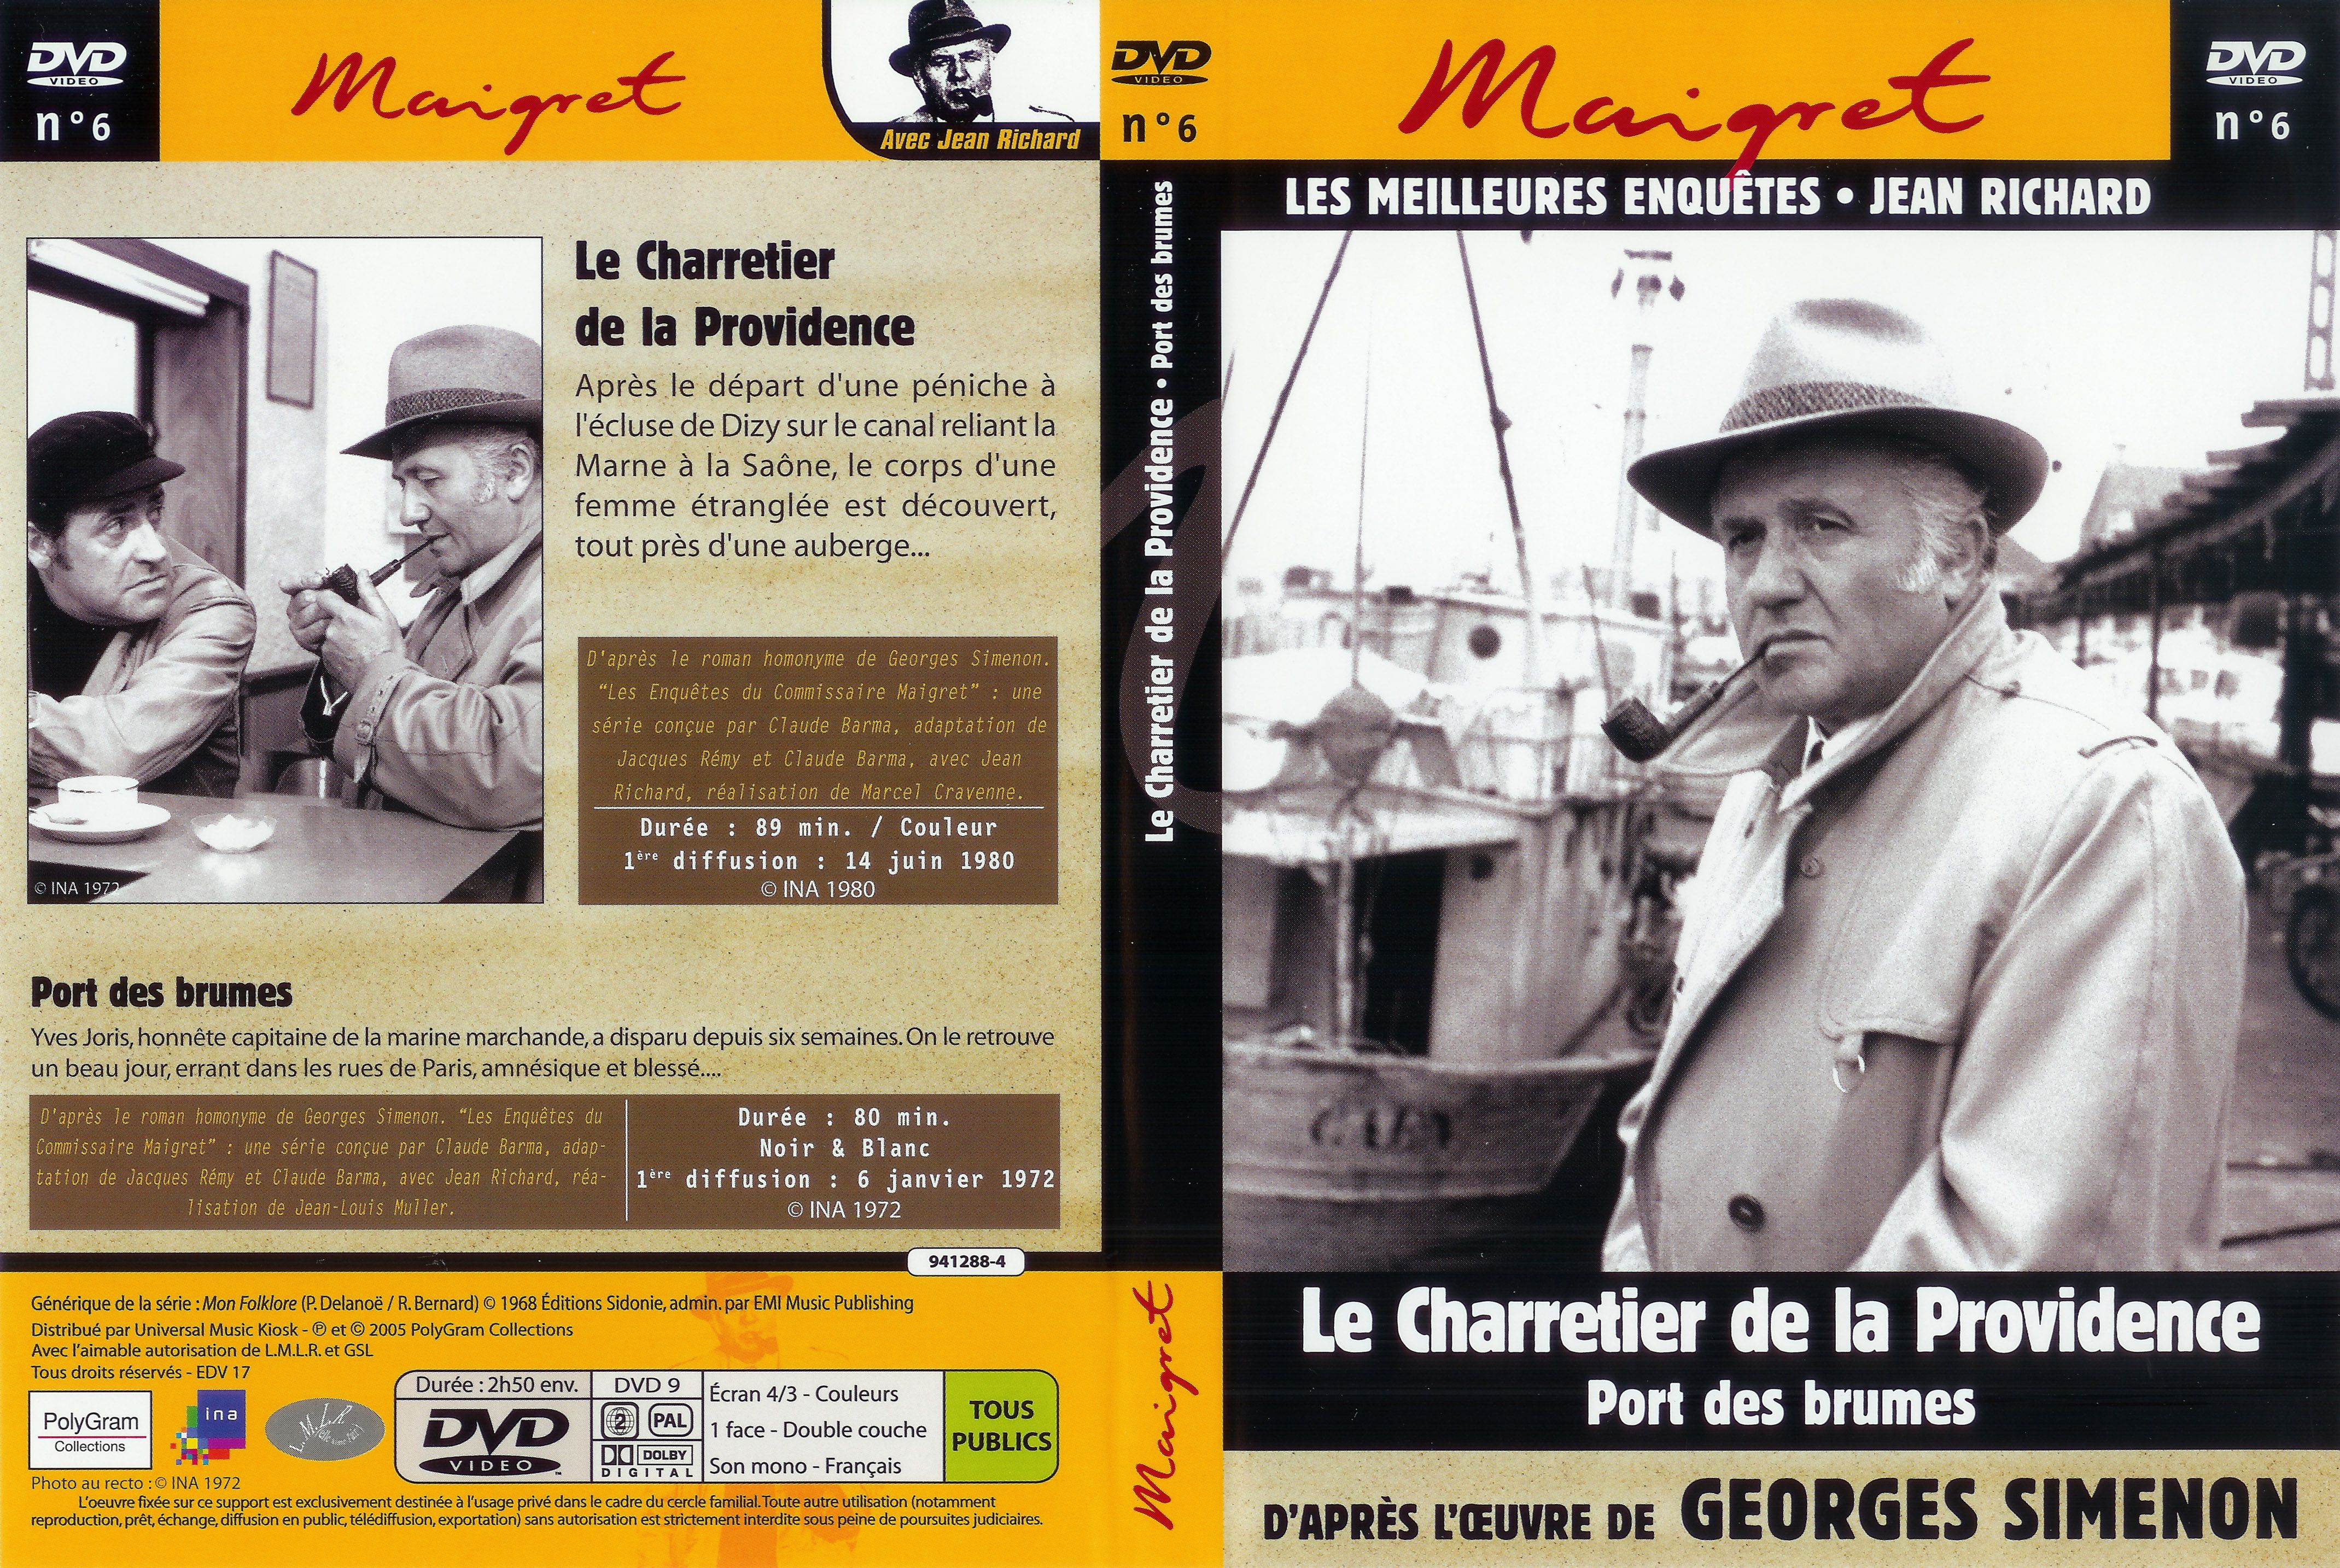 Jaquette DVD Maigret (Jean Richard) vol 06